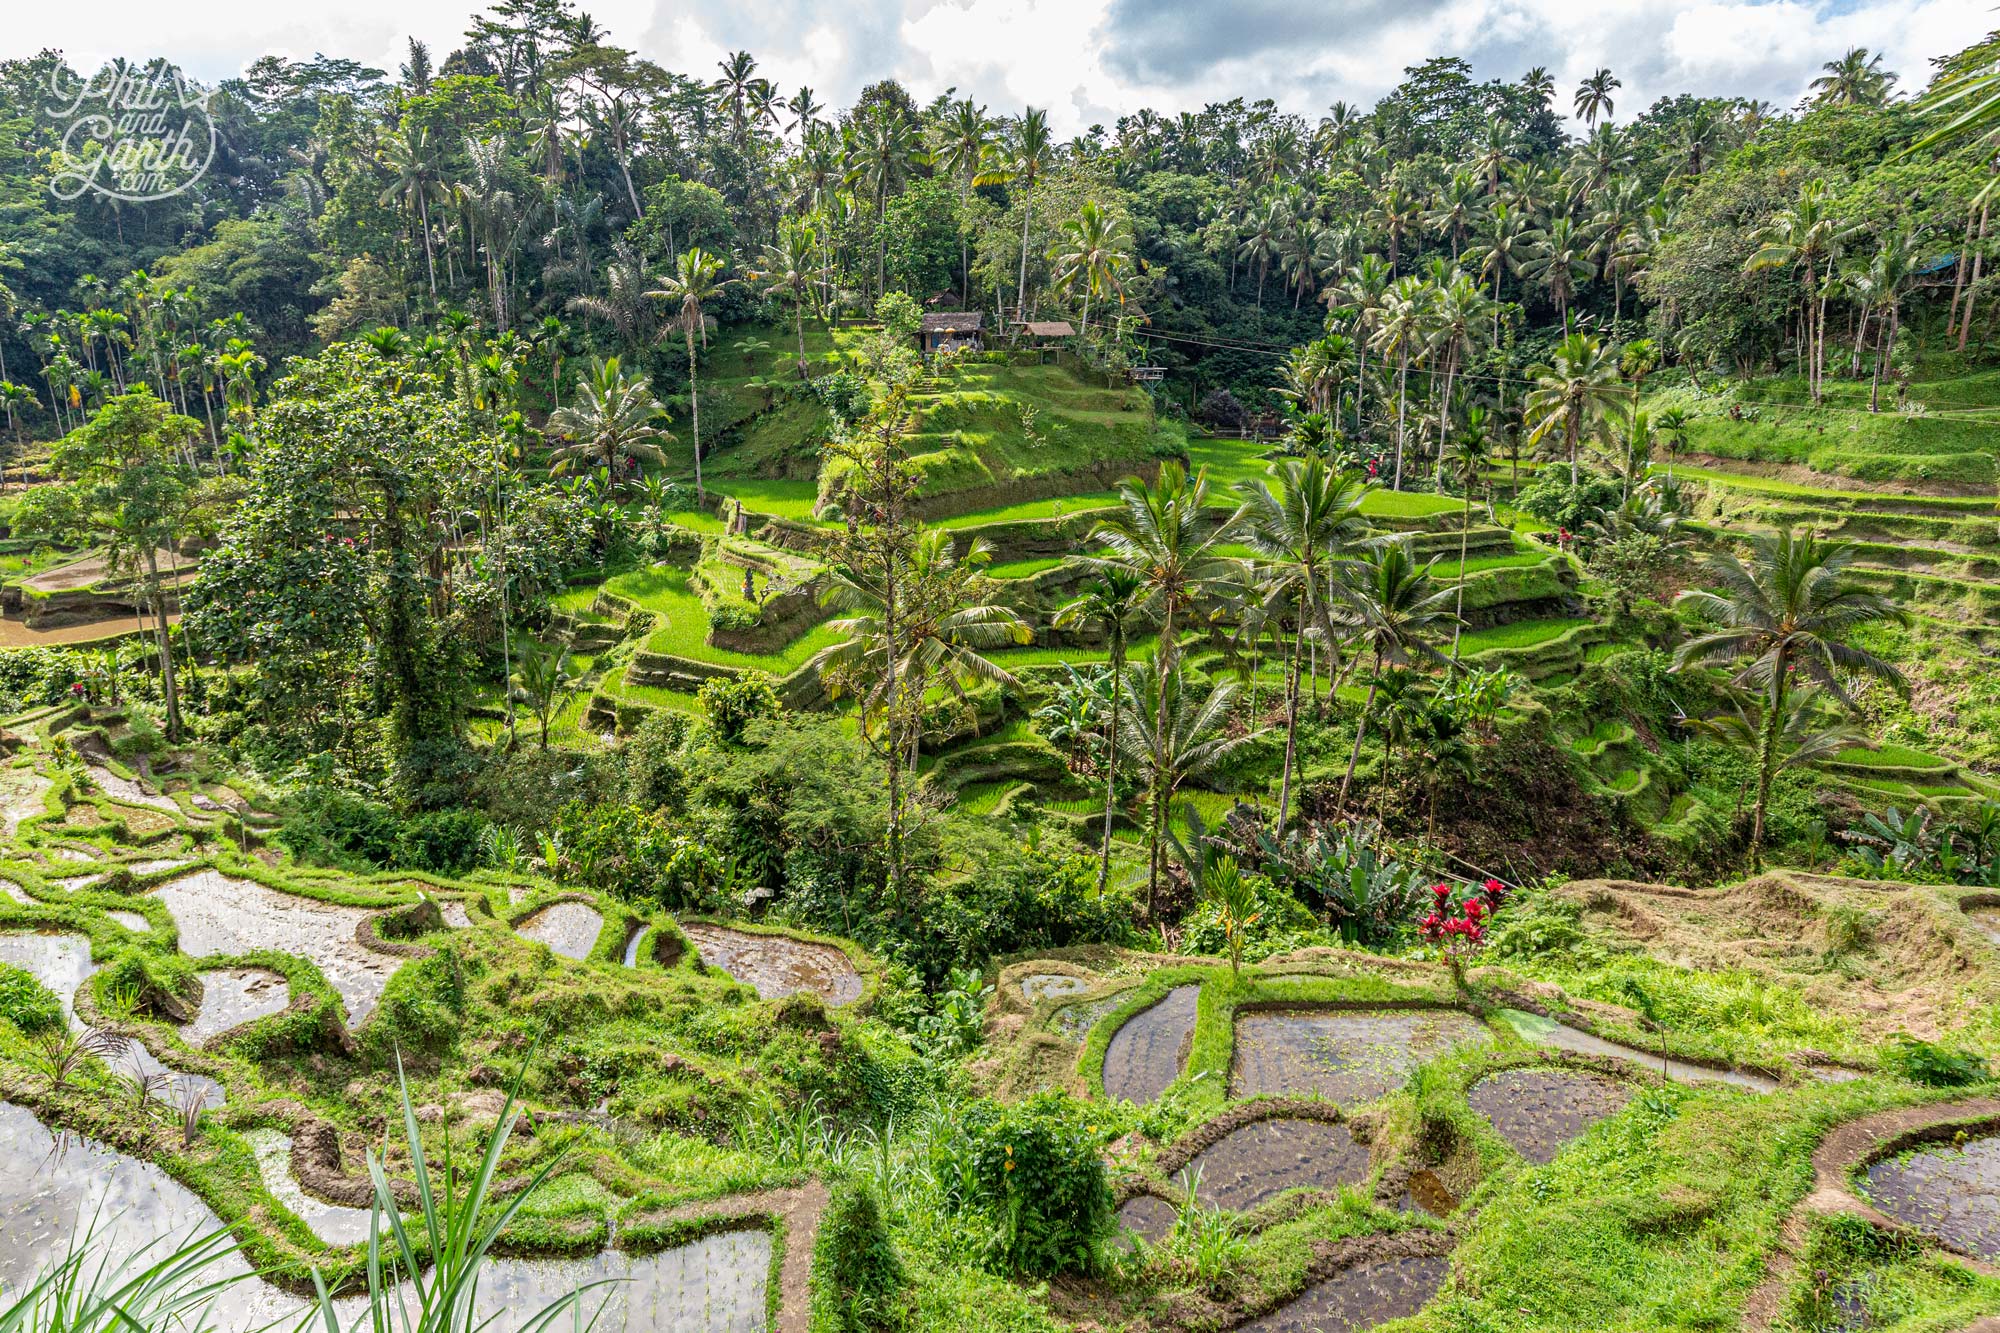 The lush green vegetation of the rice terraces spill down the hillside